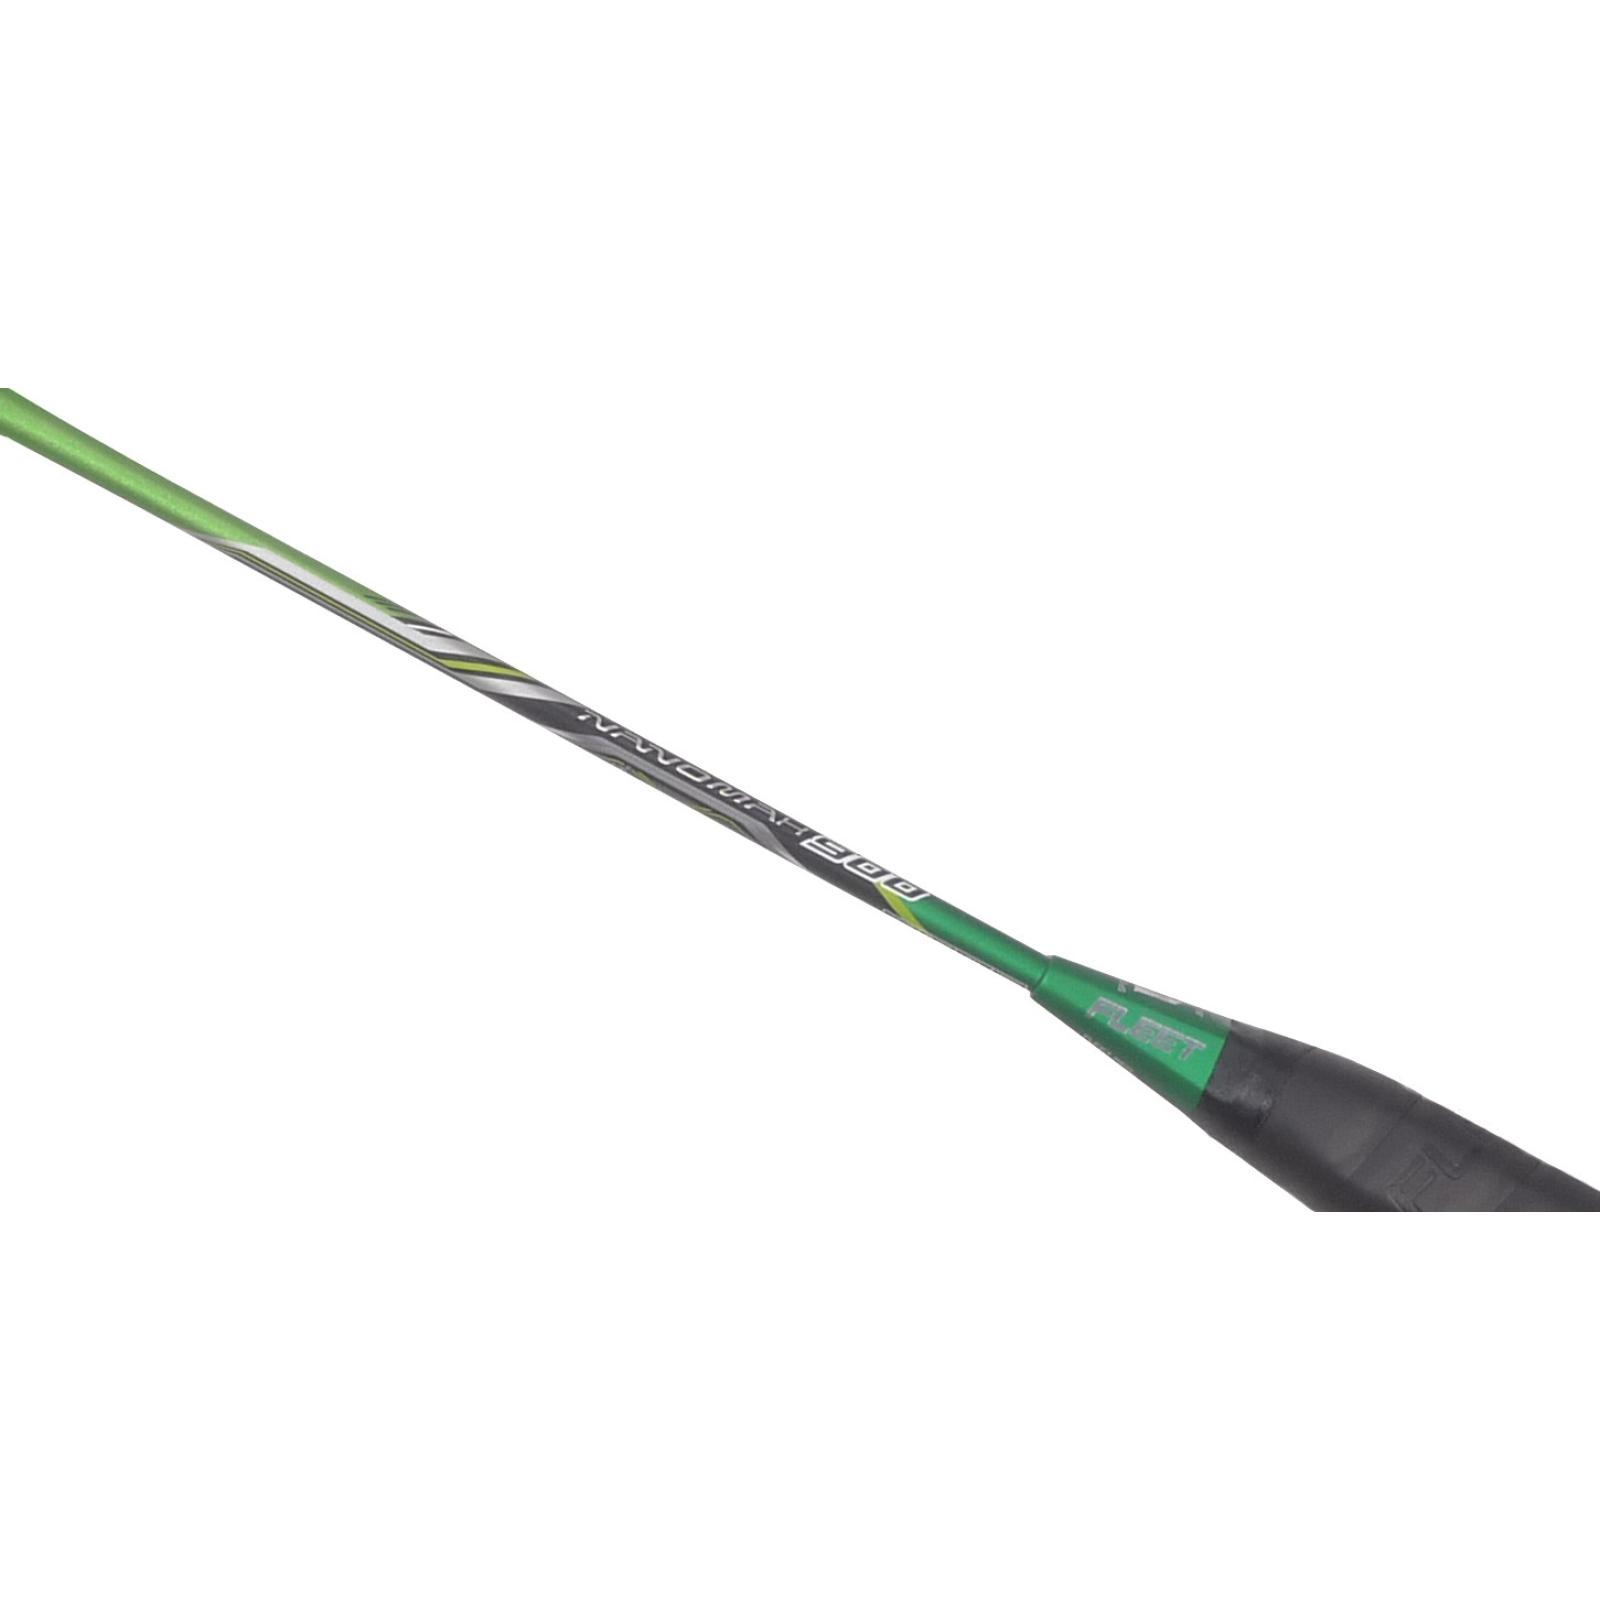 ~Out of stock Fleet NanoMax 900 Green Badminton Racket (3U)